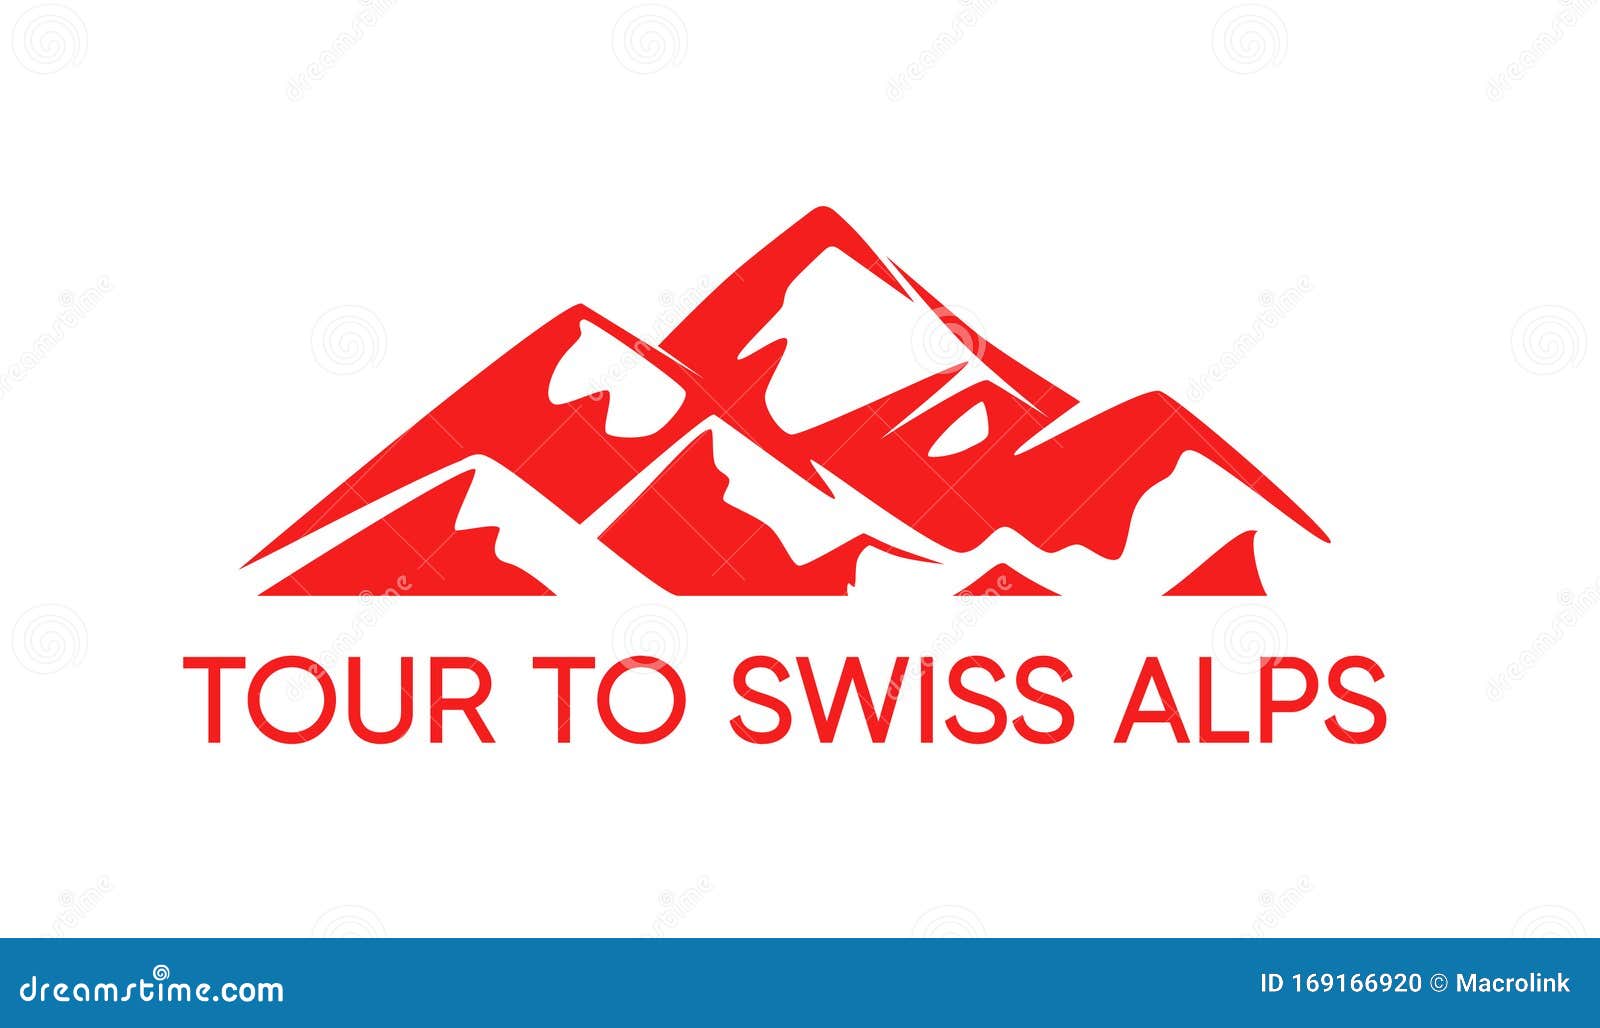 tour of the alps logo